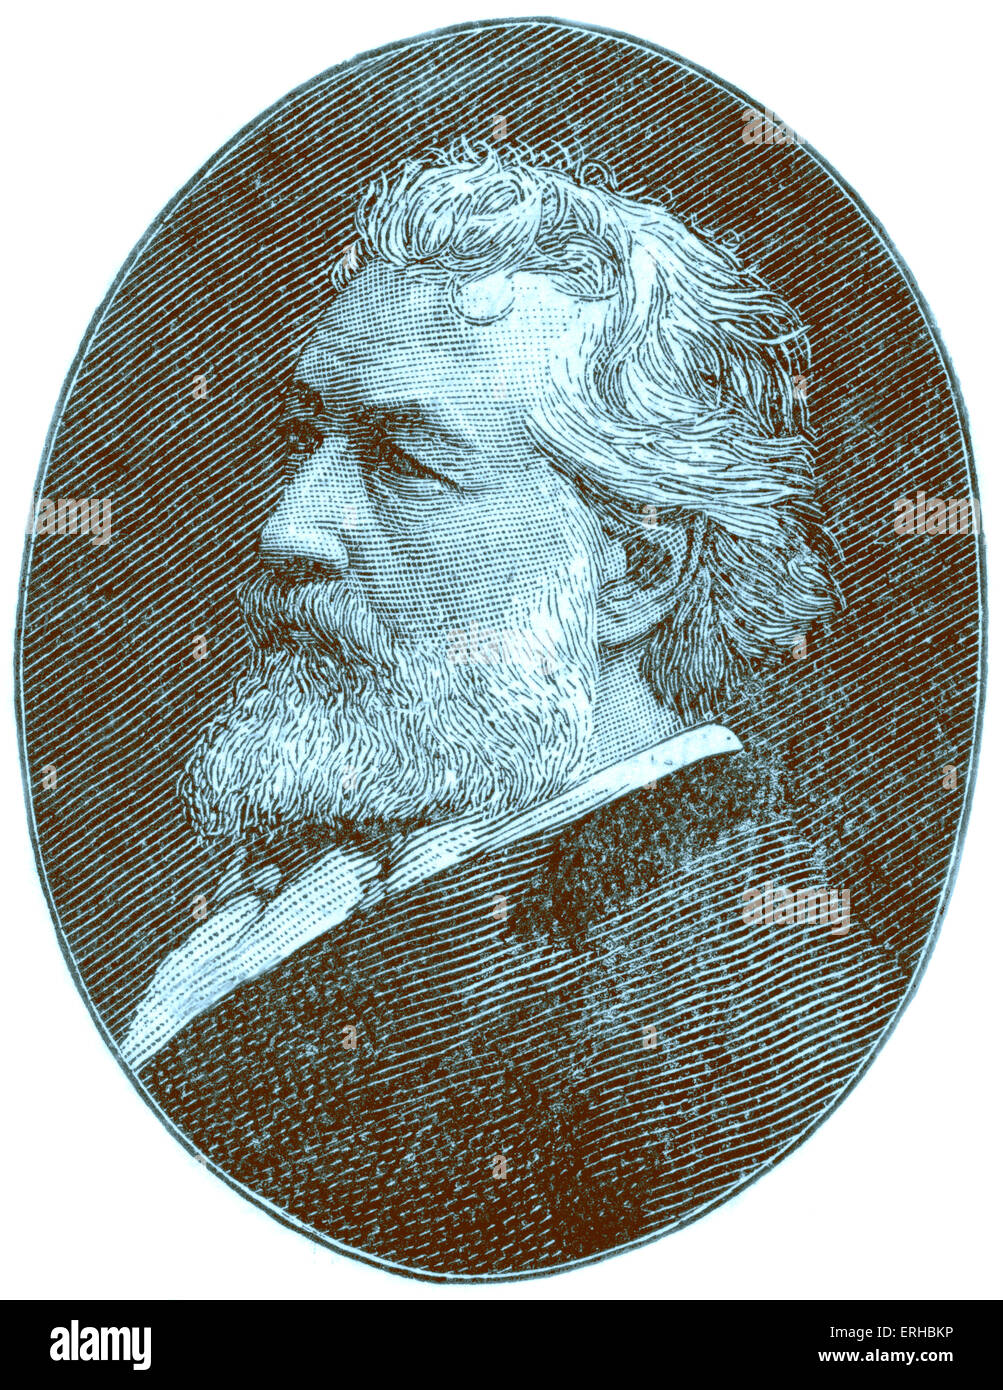 Frederic Leighton, primo Baron Leighton (3 dicembre 1830 - 25 gennaio 1896). Inglese pittore e scultore collegato con Foto Stock